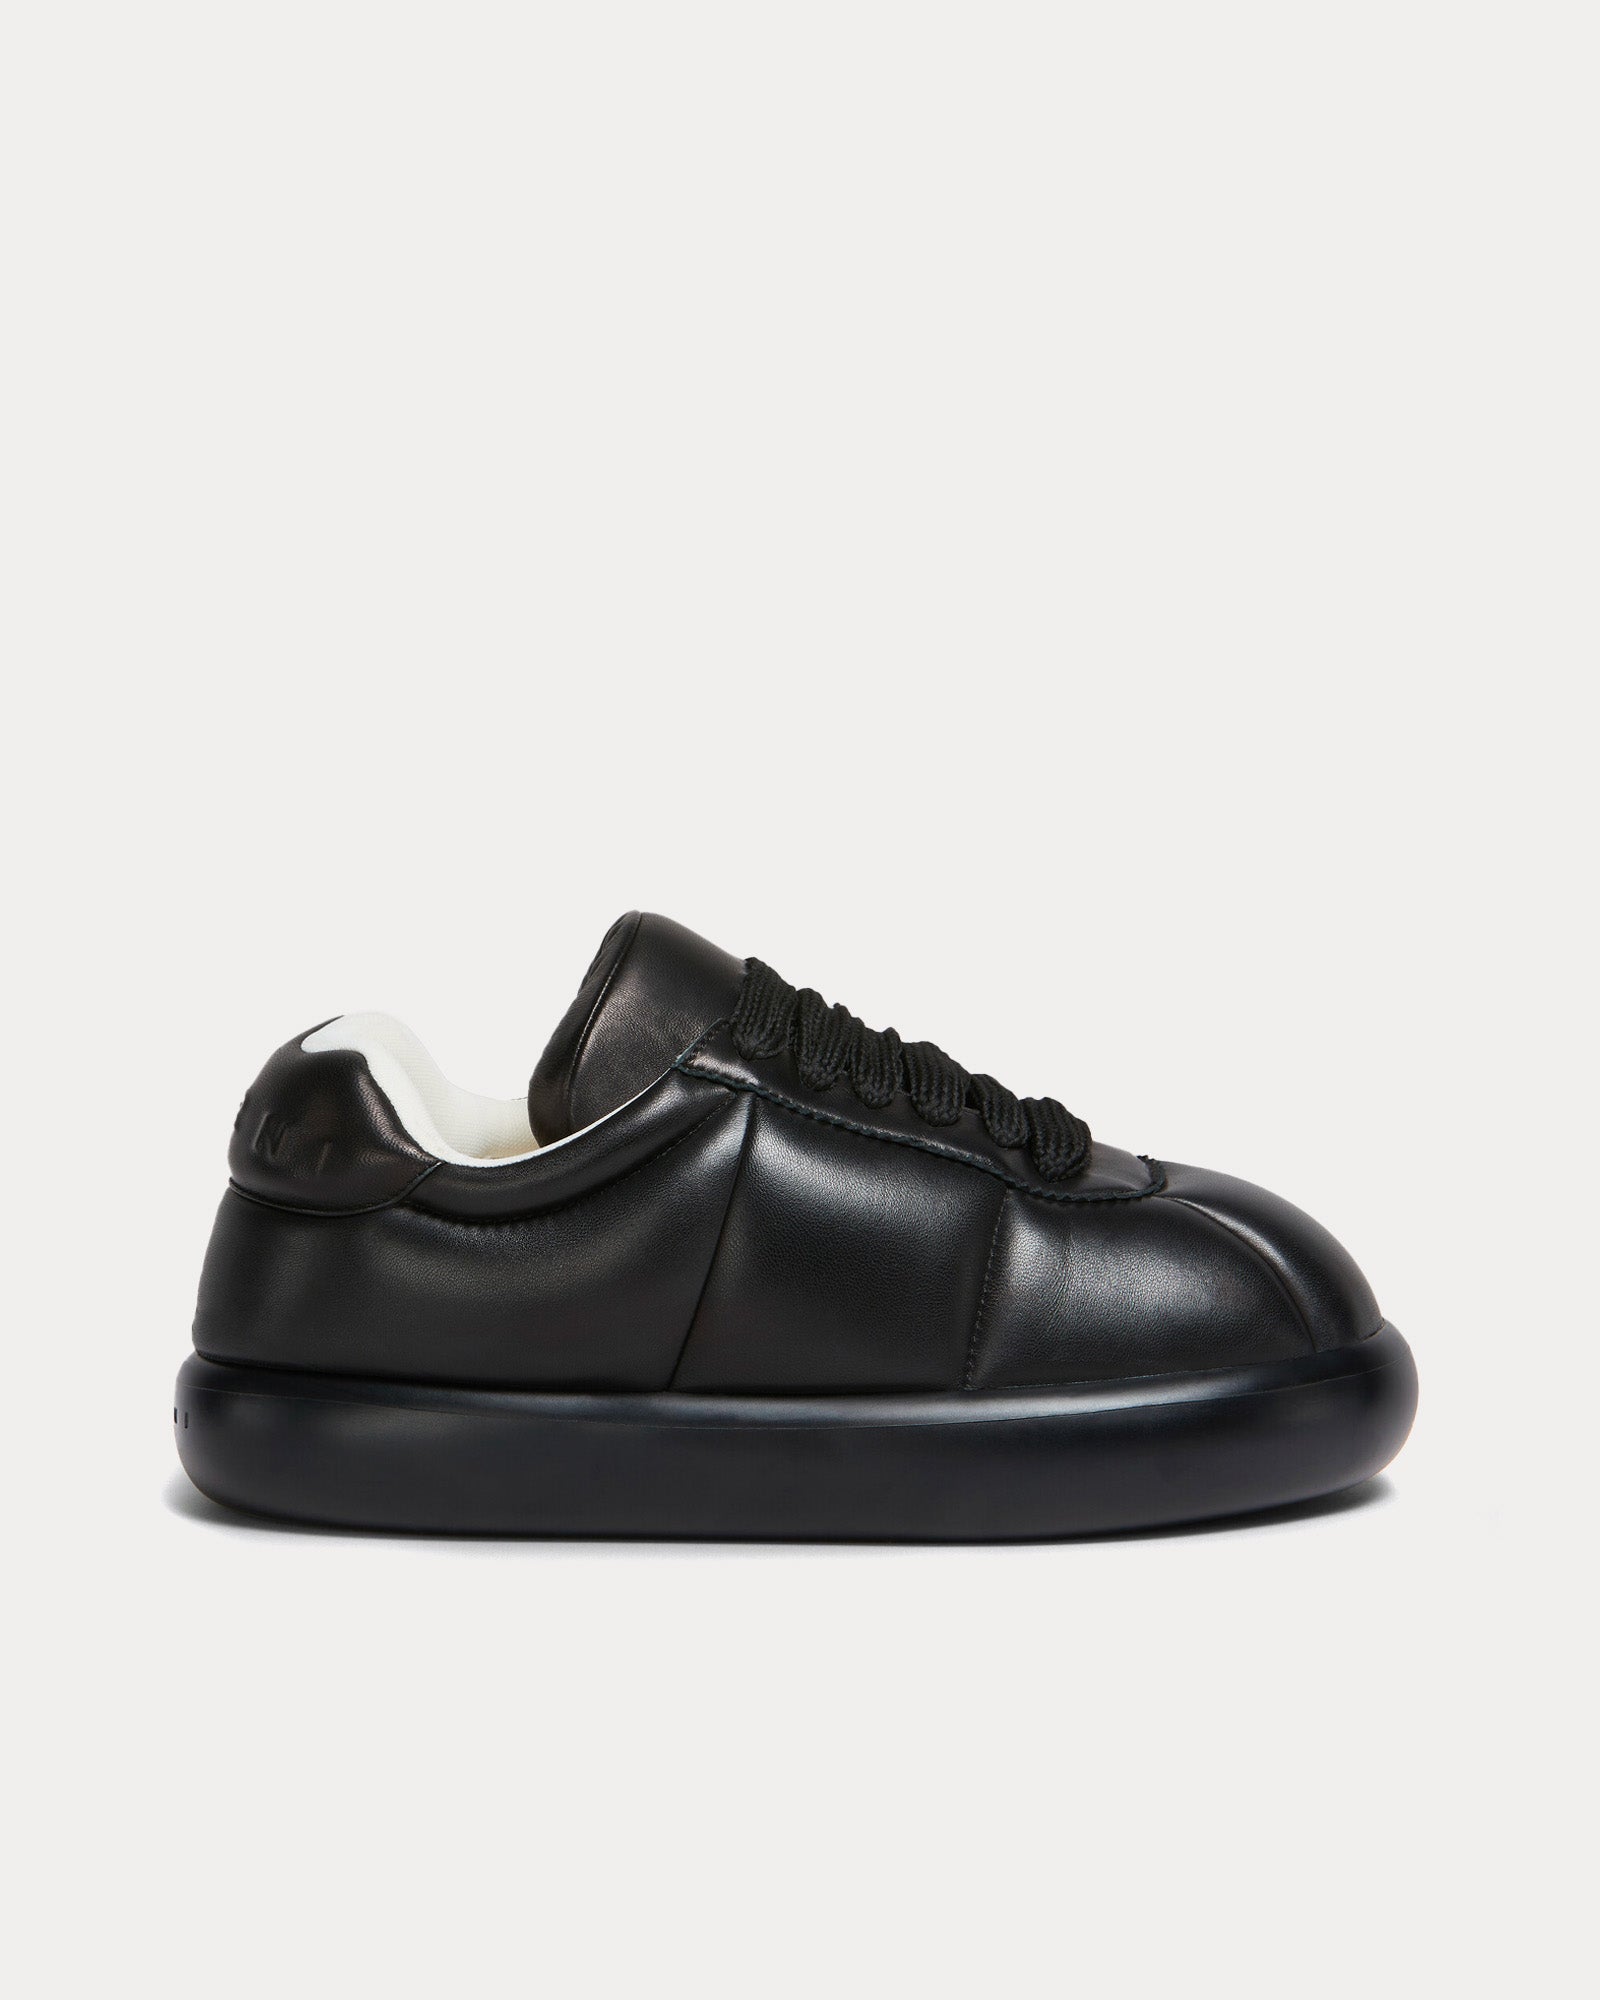 Marni - Bigfoot 2.0 Leather Black Low Top Sneakers